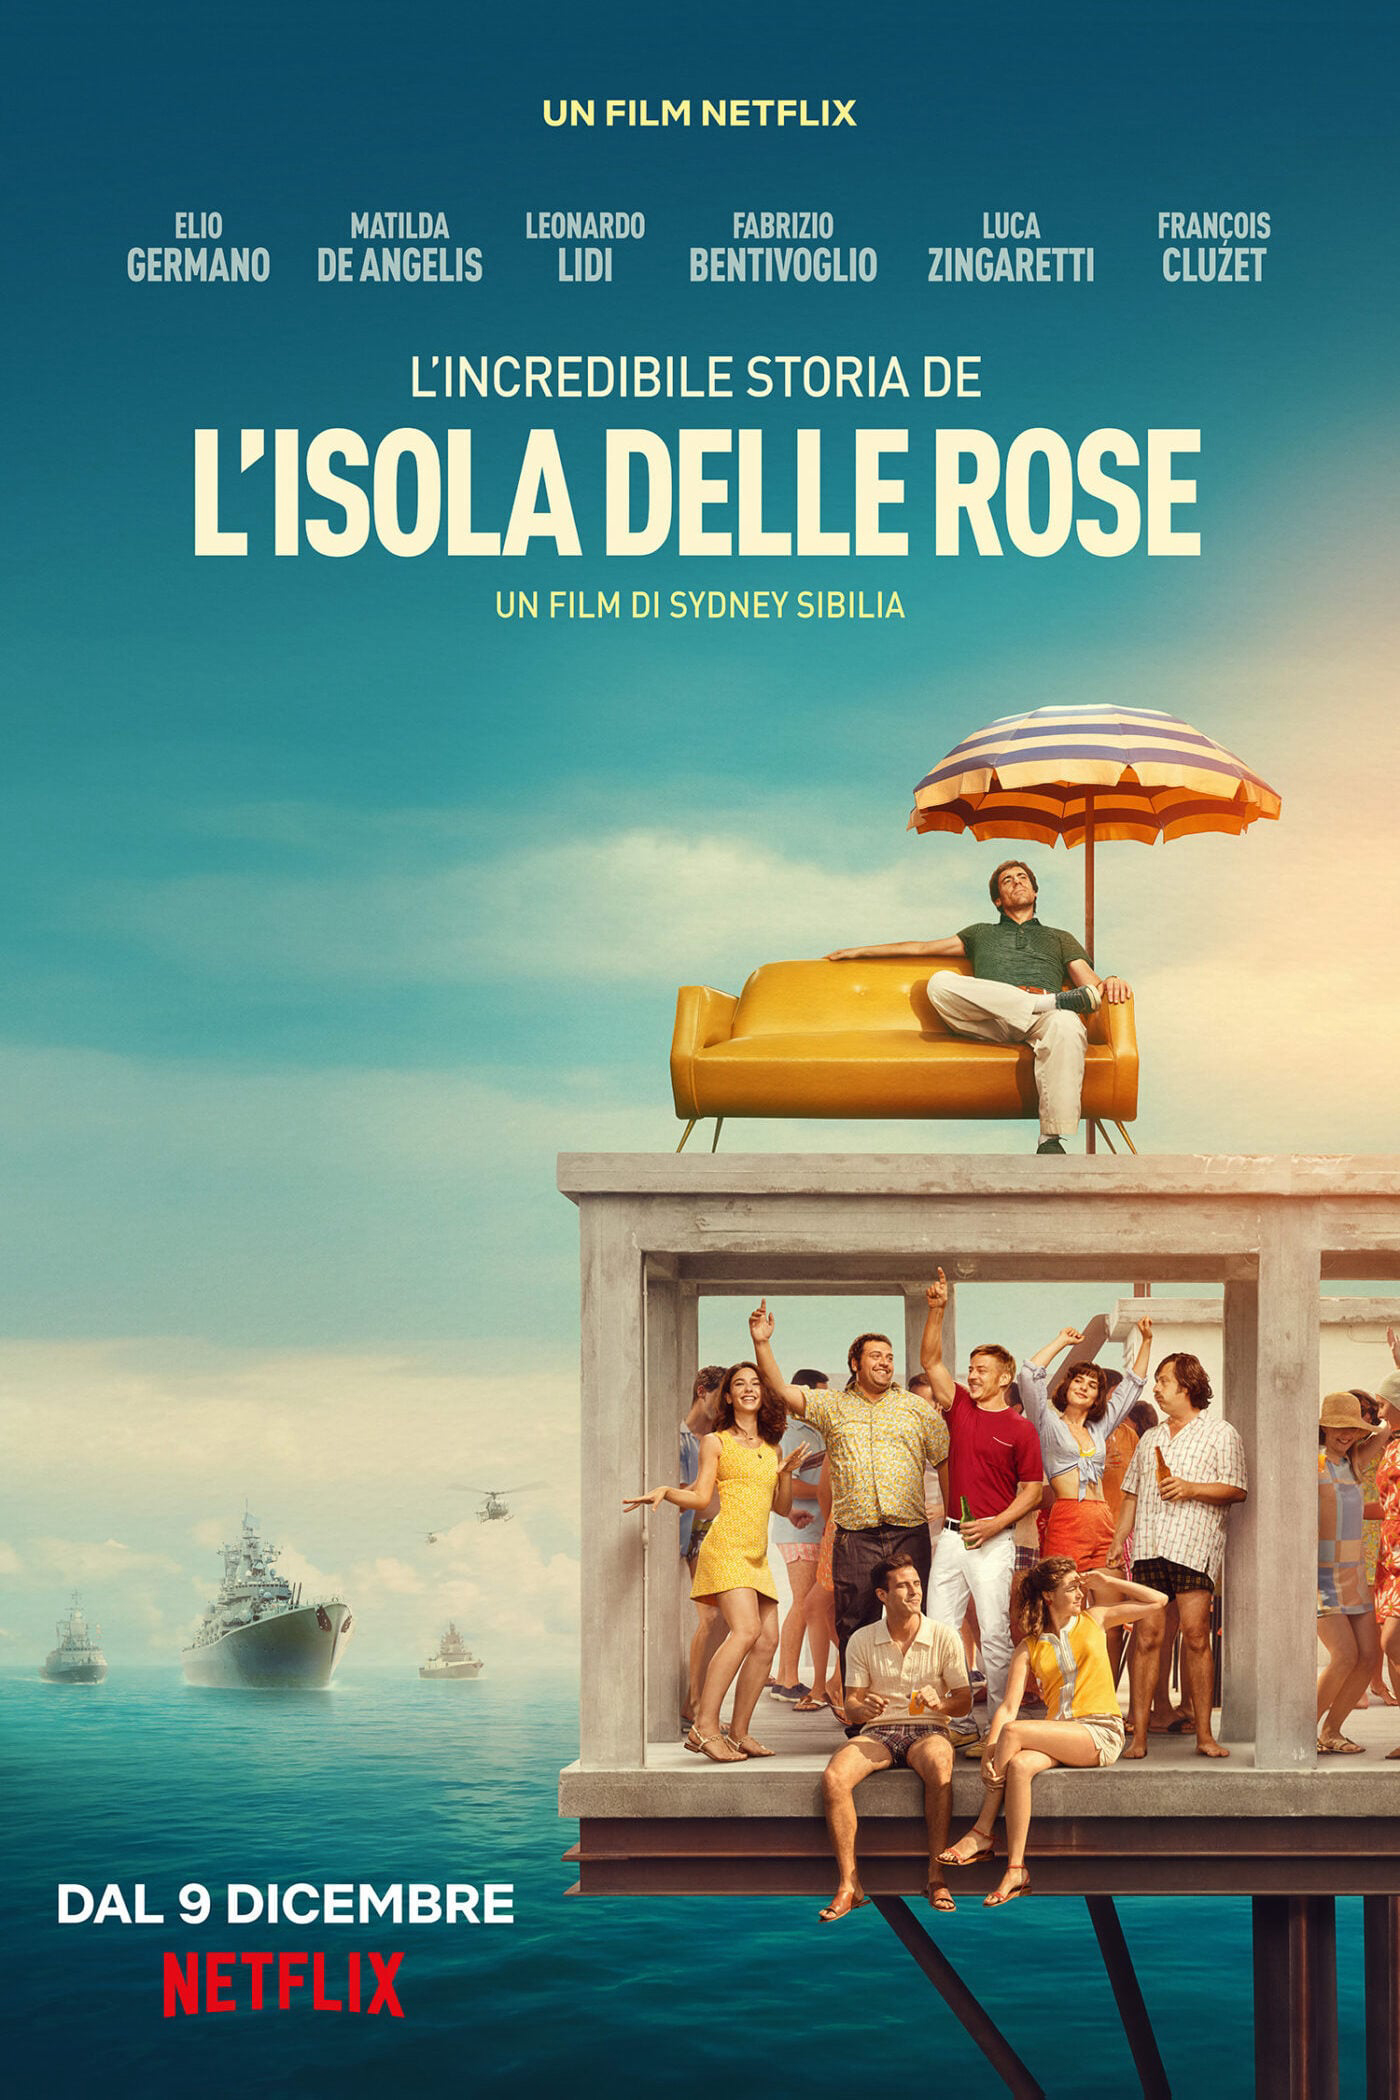 Poster Phim Đảo Hoa hồng (Rose Island)